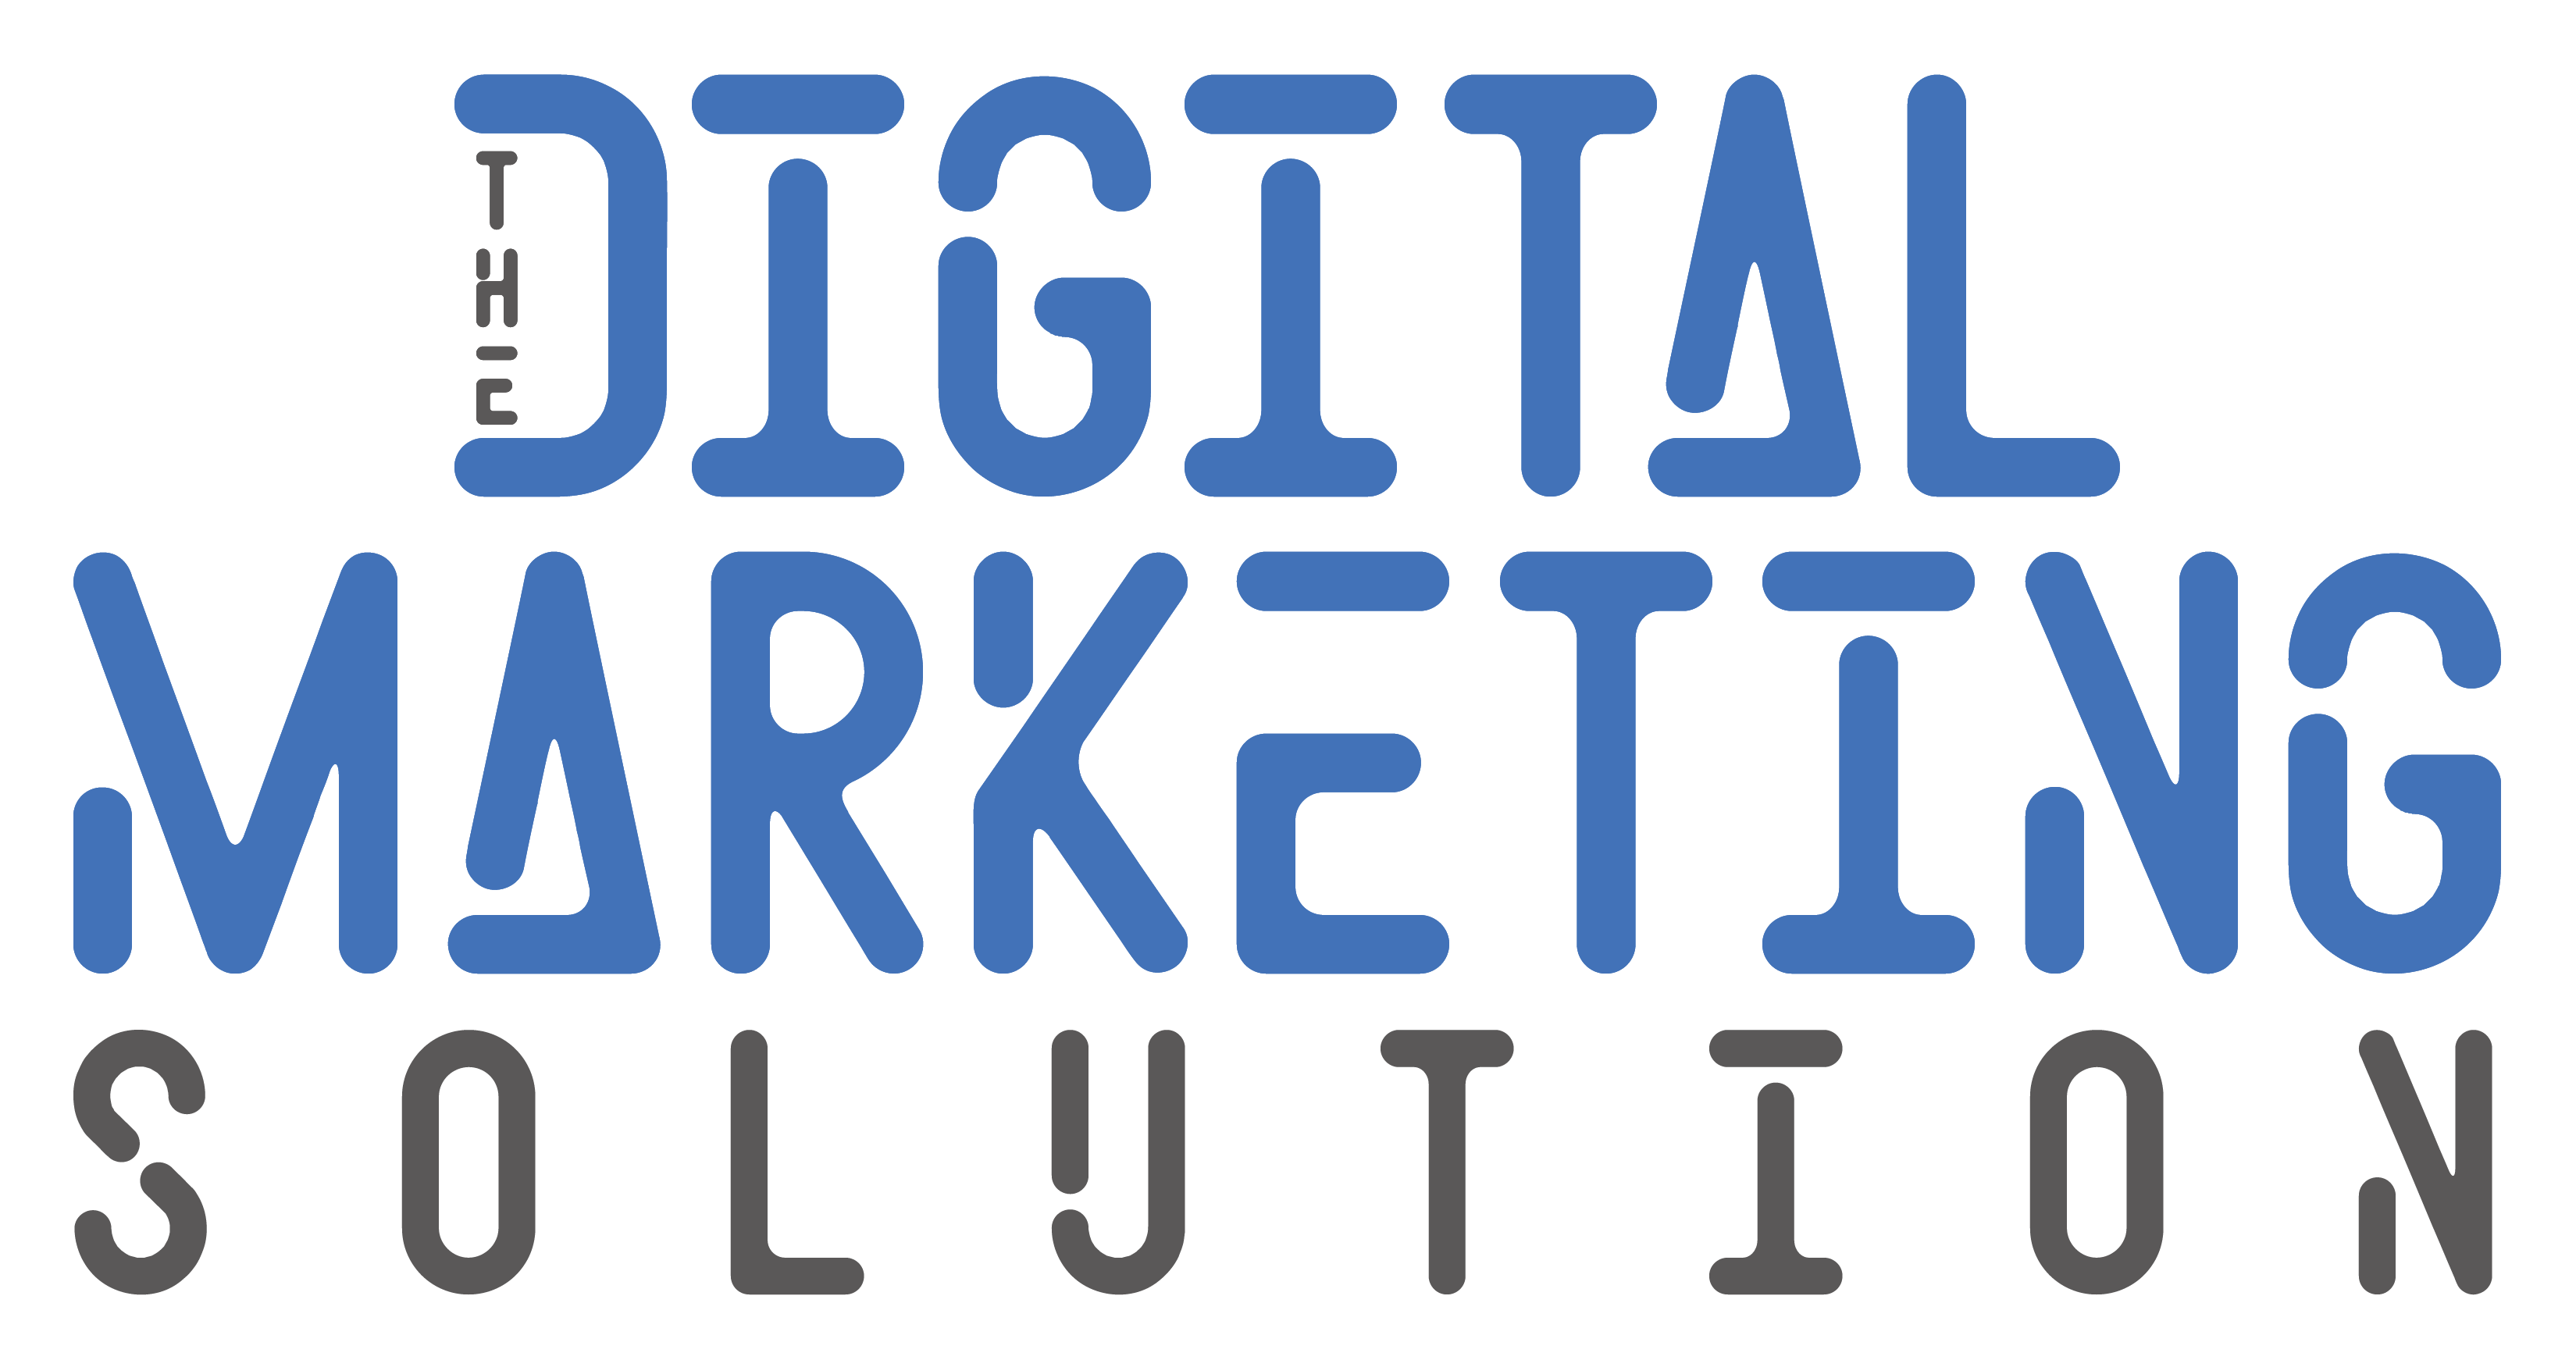 The Digital Marketing Solution